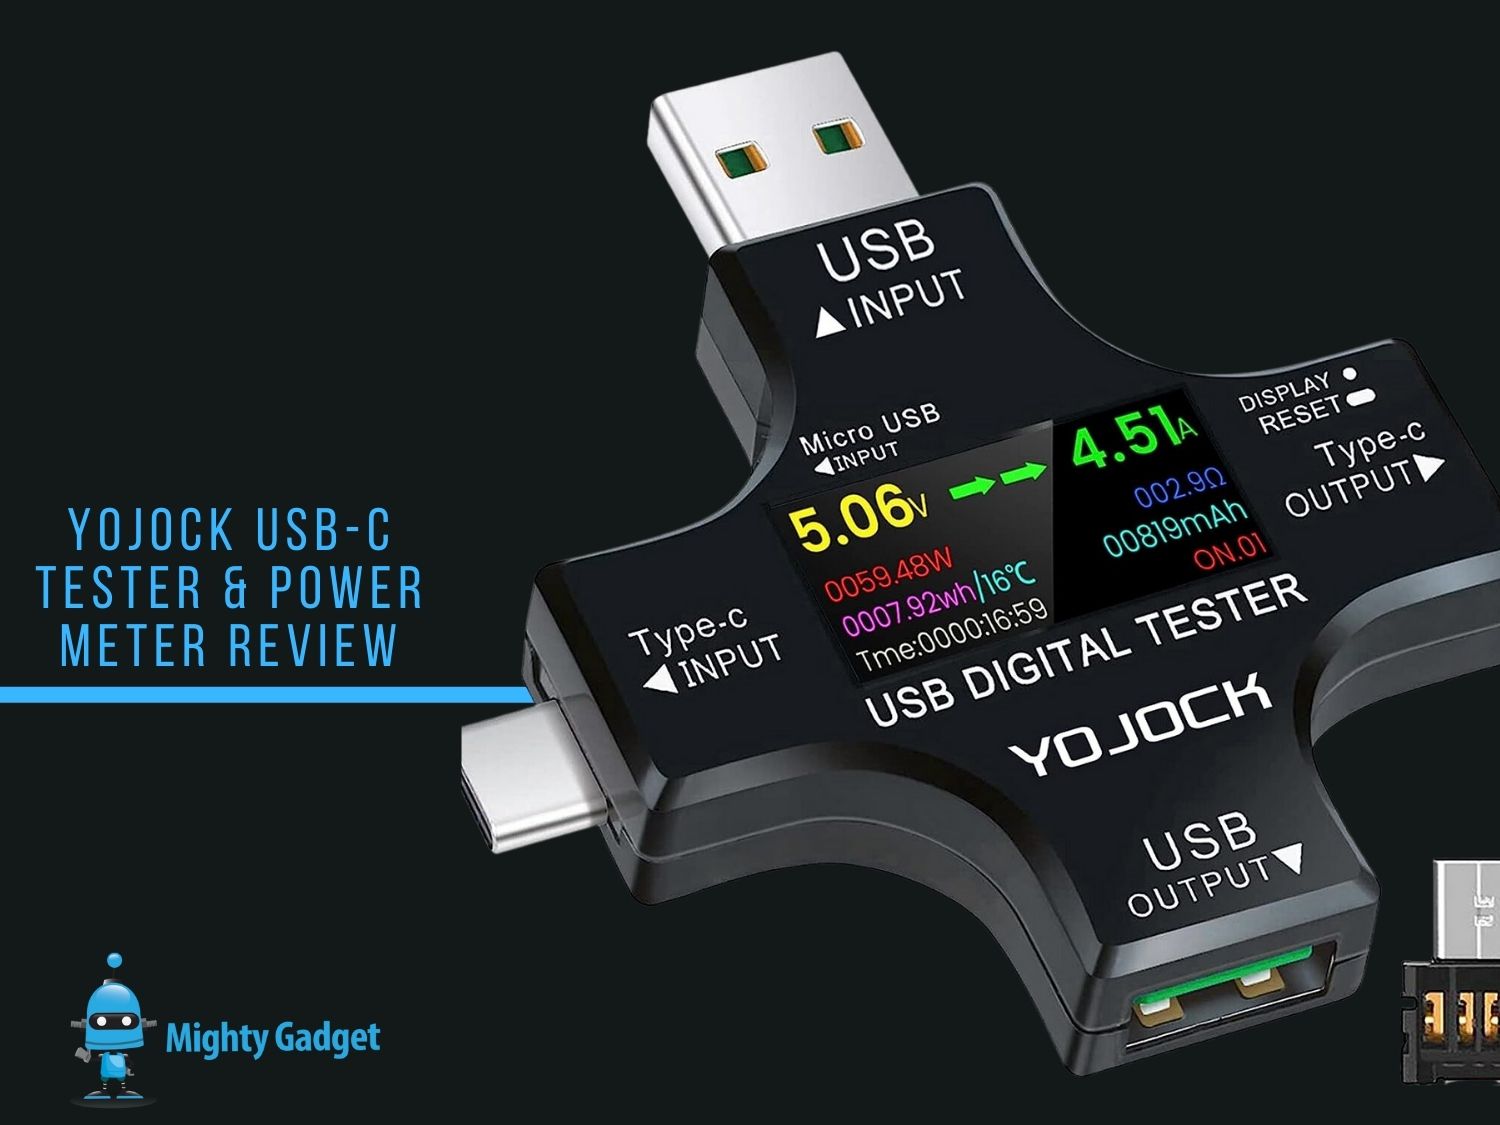 YOJOCK J7-C USB-C Tester & Power Meter Review